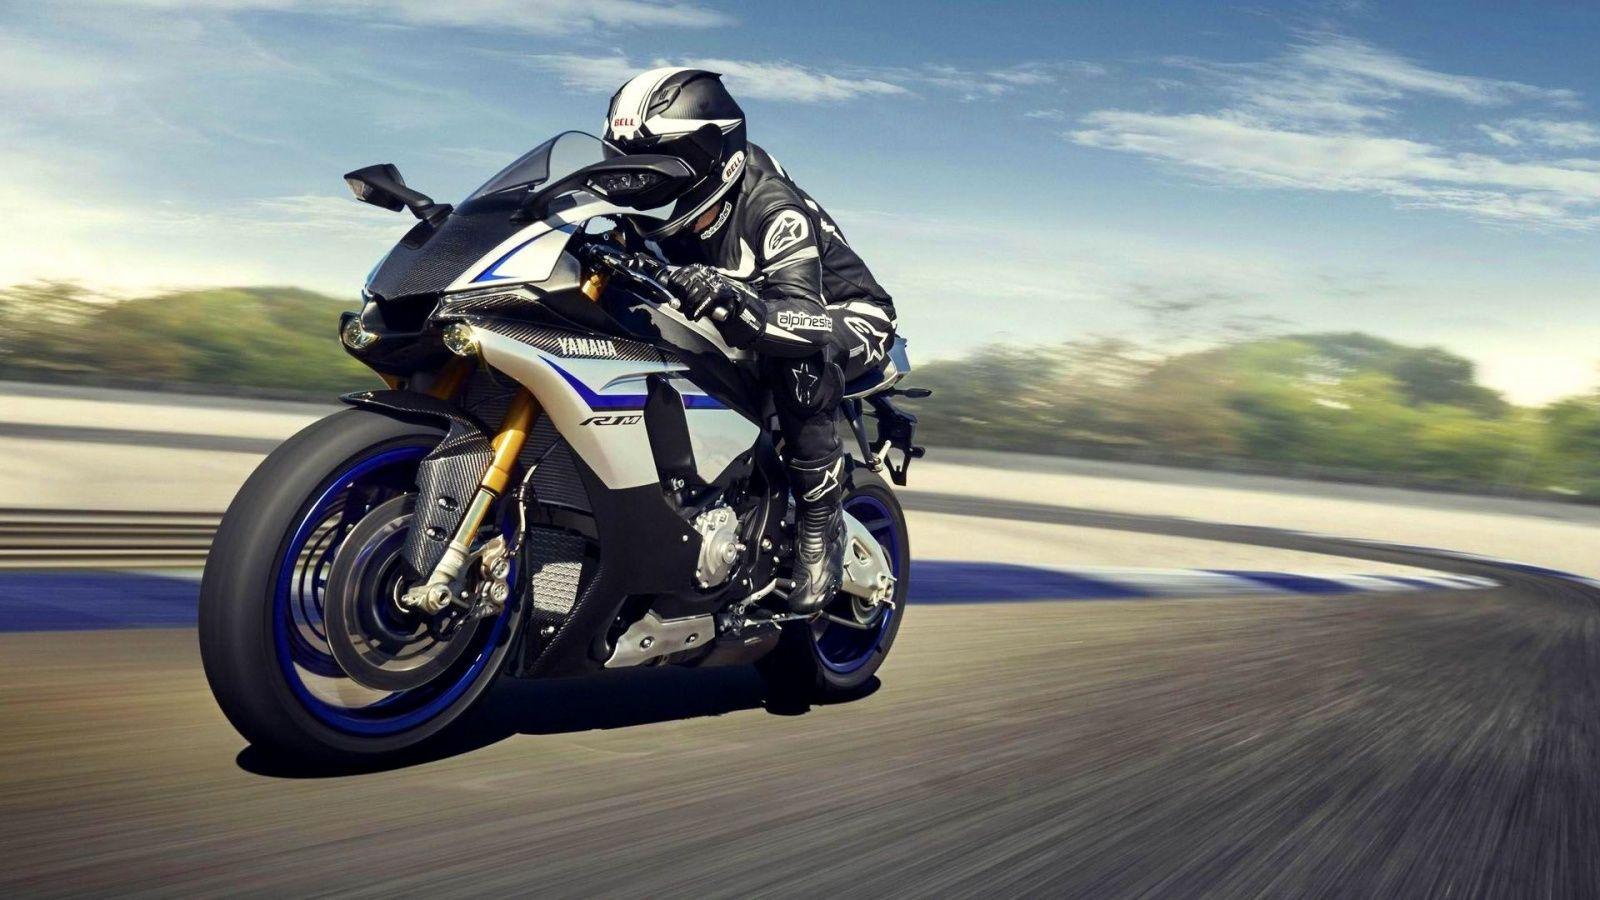 Bikes & Motorcycles 2016 Yamaha YZF R1 wallpaper Desktop, Phone